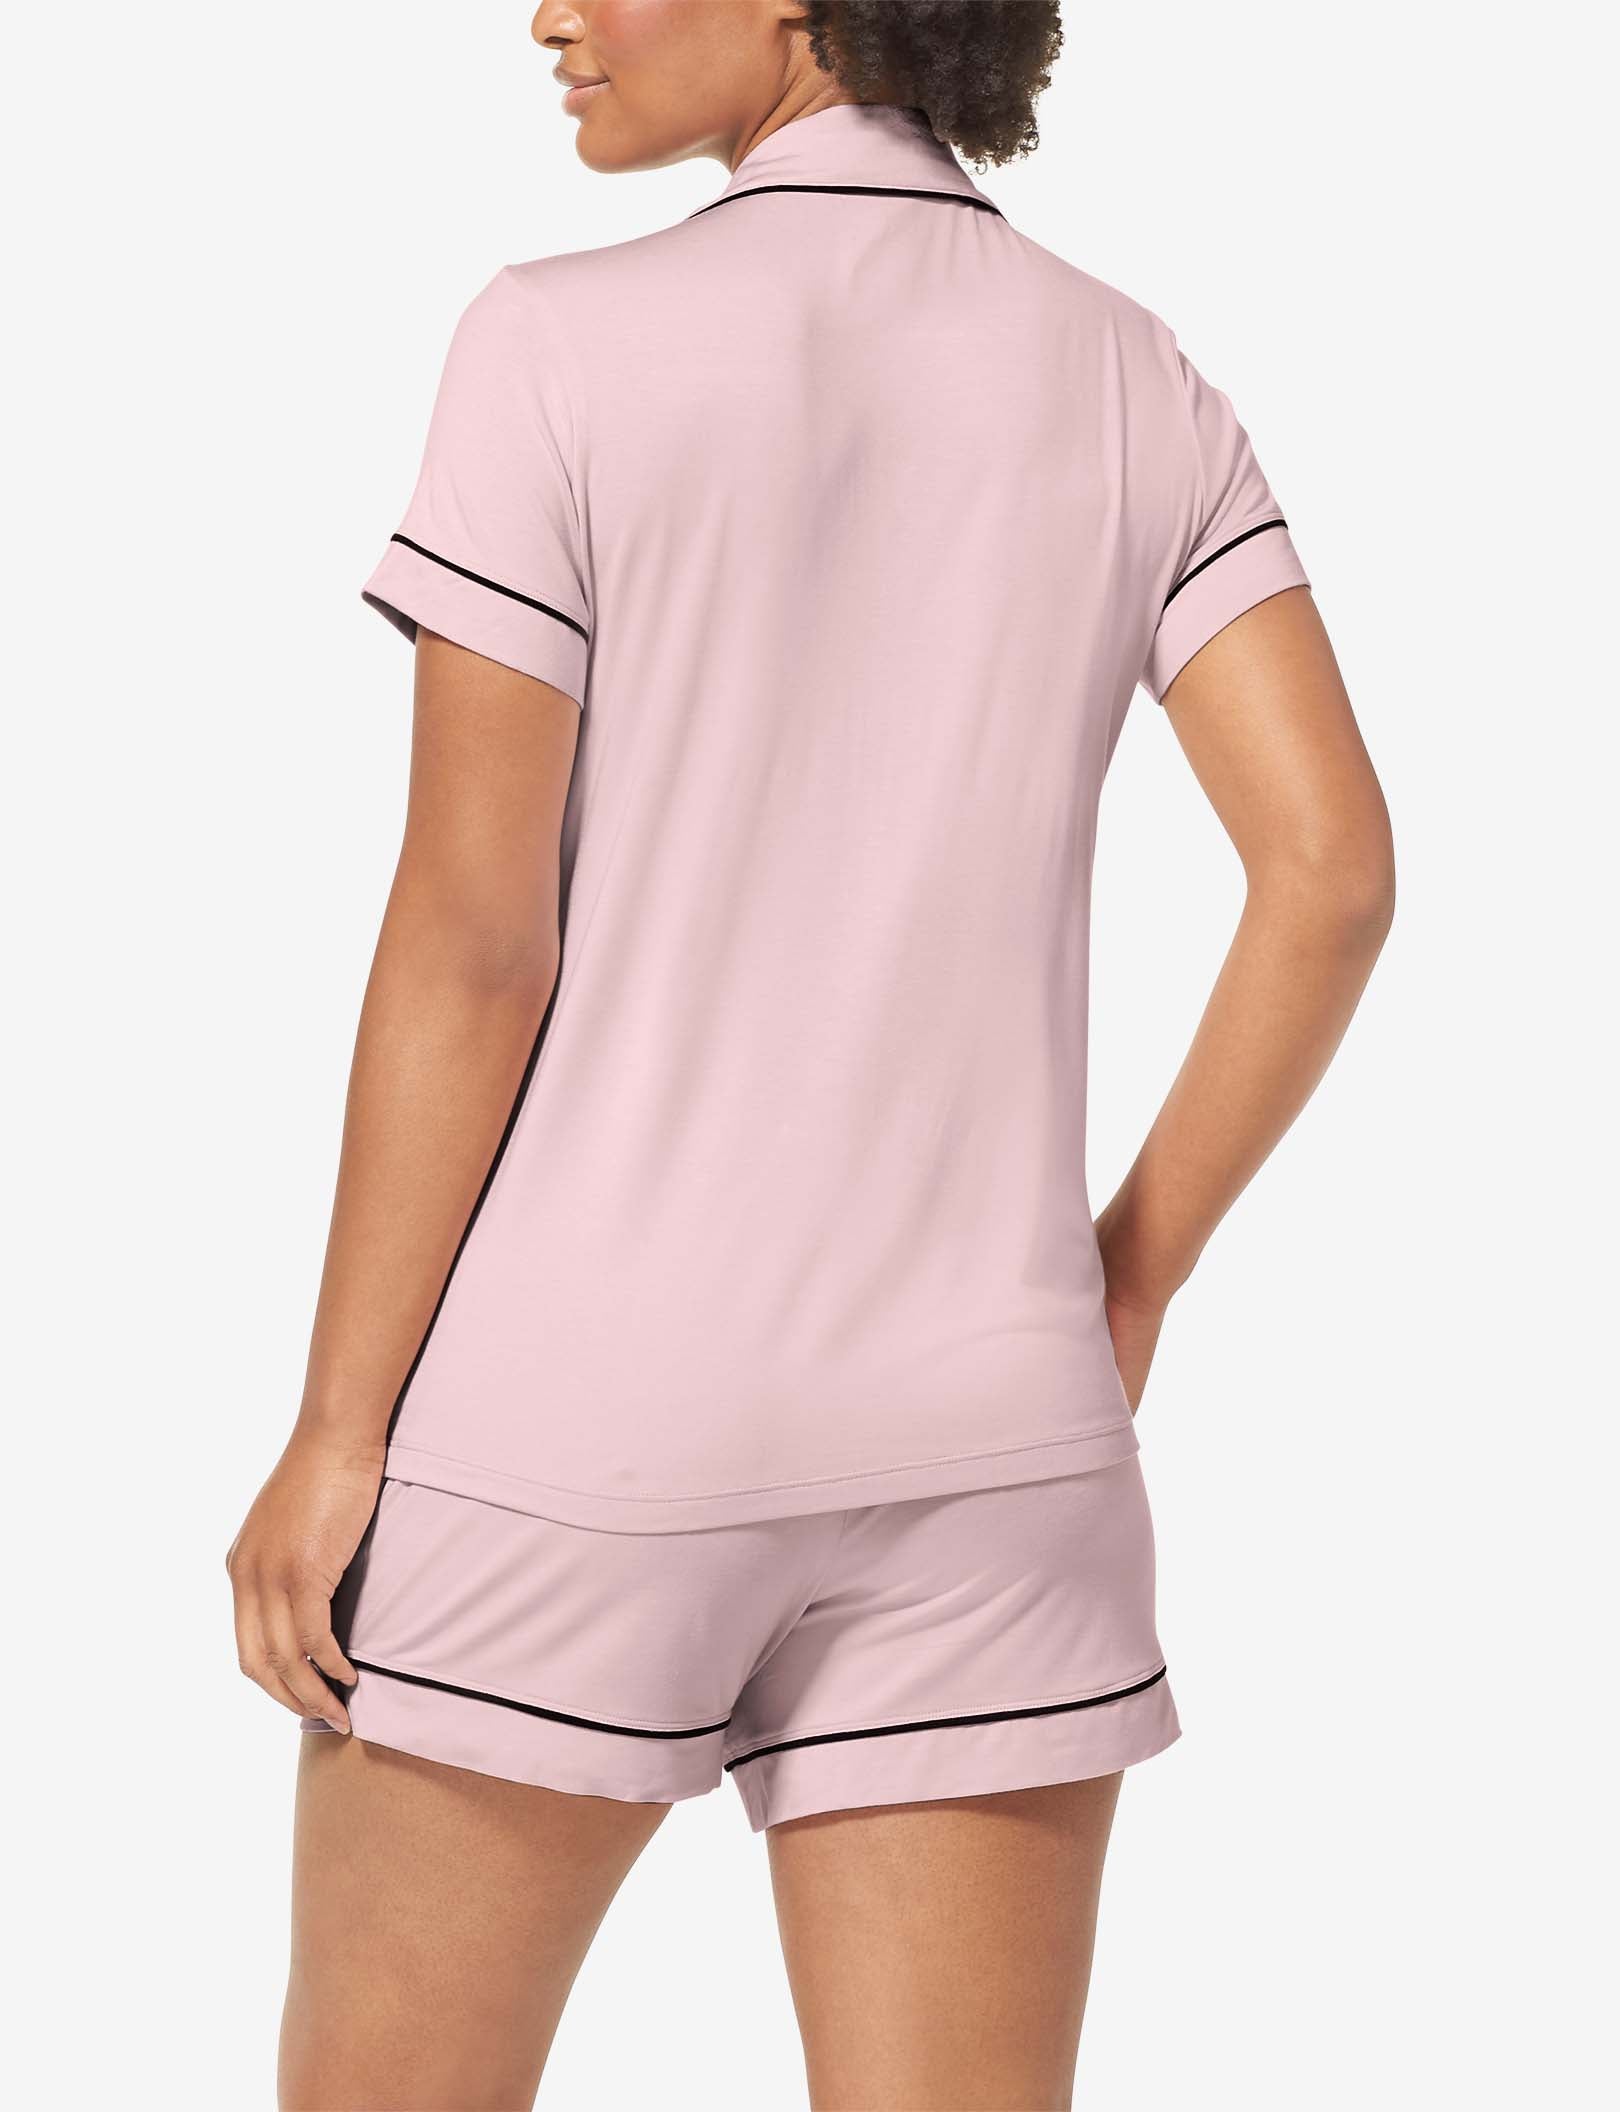 Women's Short Sleeve Top & Short Pajama Set, Peachskin